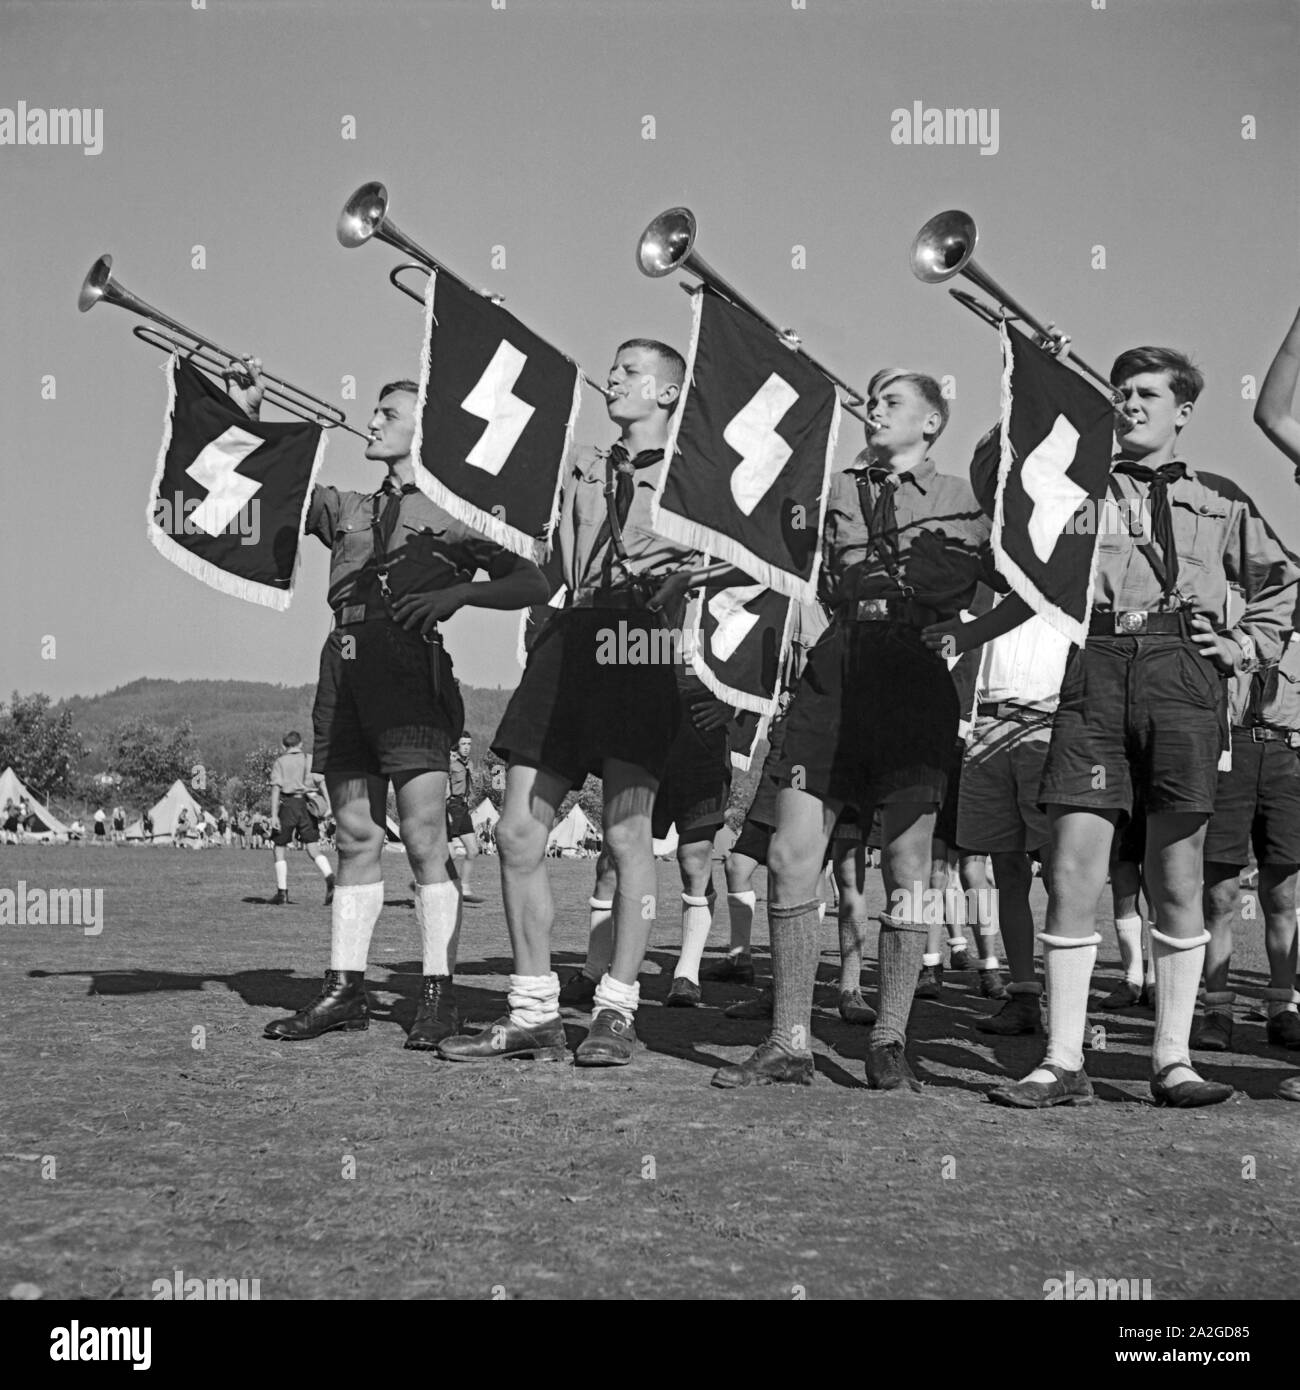 Vier Trompeter des Musikzuges Jungvolk Hitlerjugend blasen zum Antreten im Lager, Österreich 1930 er Jahre. Quatre garçons du Jungvolk clairon leur bloweing appel de clairon pour mobiliser à l'Hitler Youth Camp, Autriche 1930. Banque D'Images